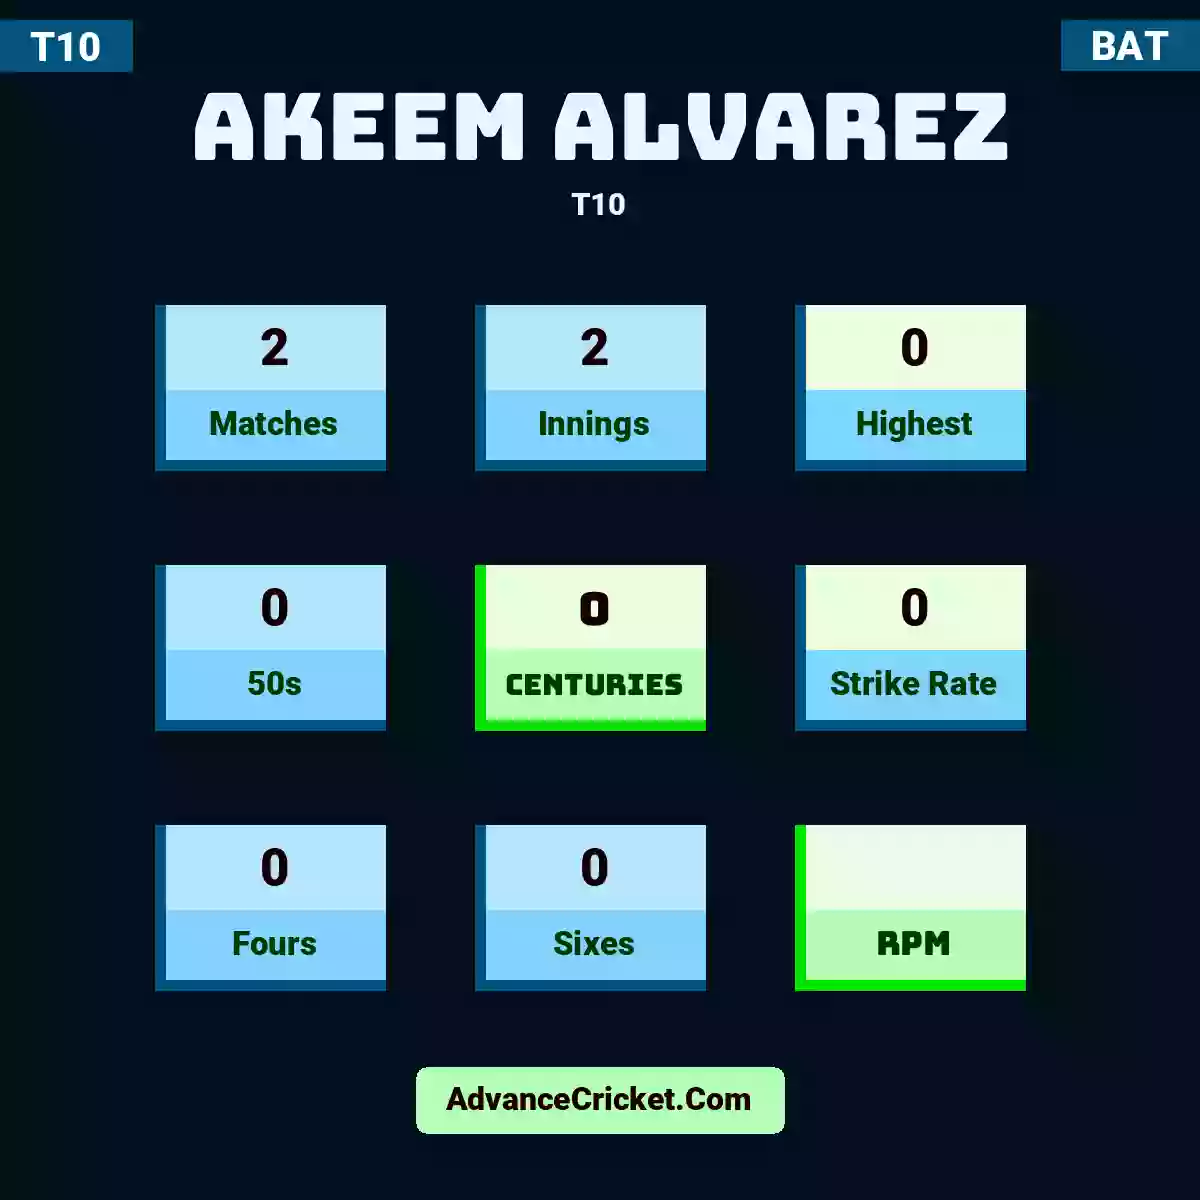 Akeem Alvarez T10 , Akeem Alvarez played 2 matches, scored 0 runs as highest, 0 half-centuries, and 0 centuries, with a strike rate of 0. A.Alvarez hit 0 fours and 0 sixes.